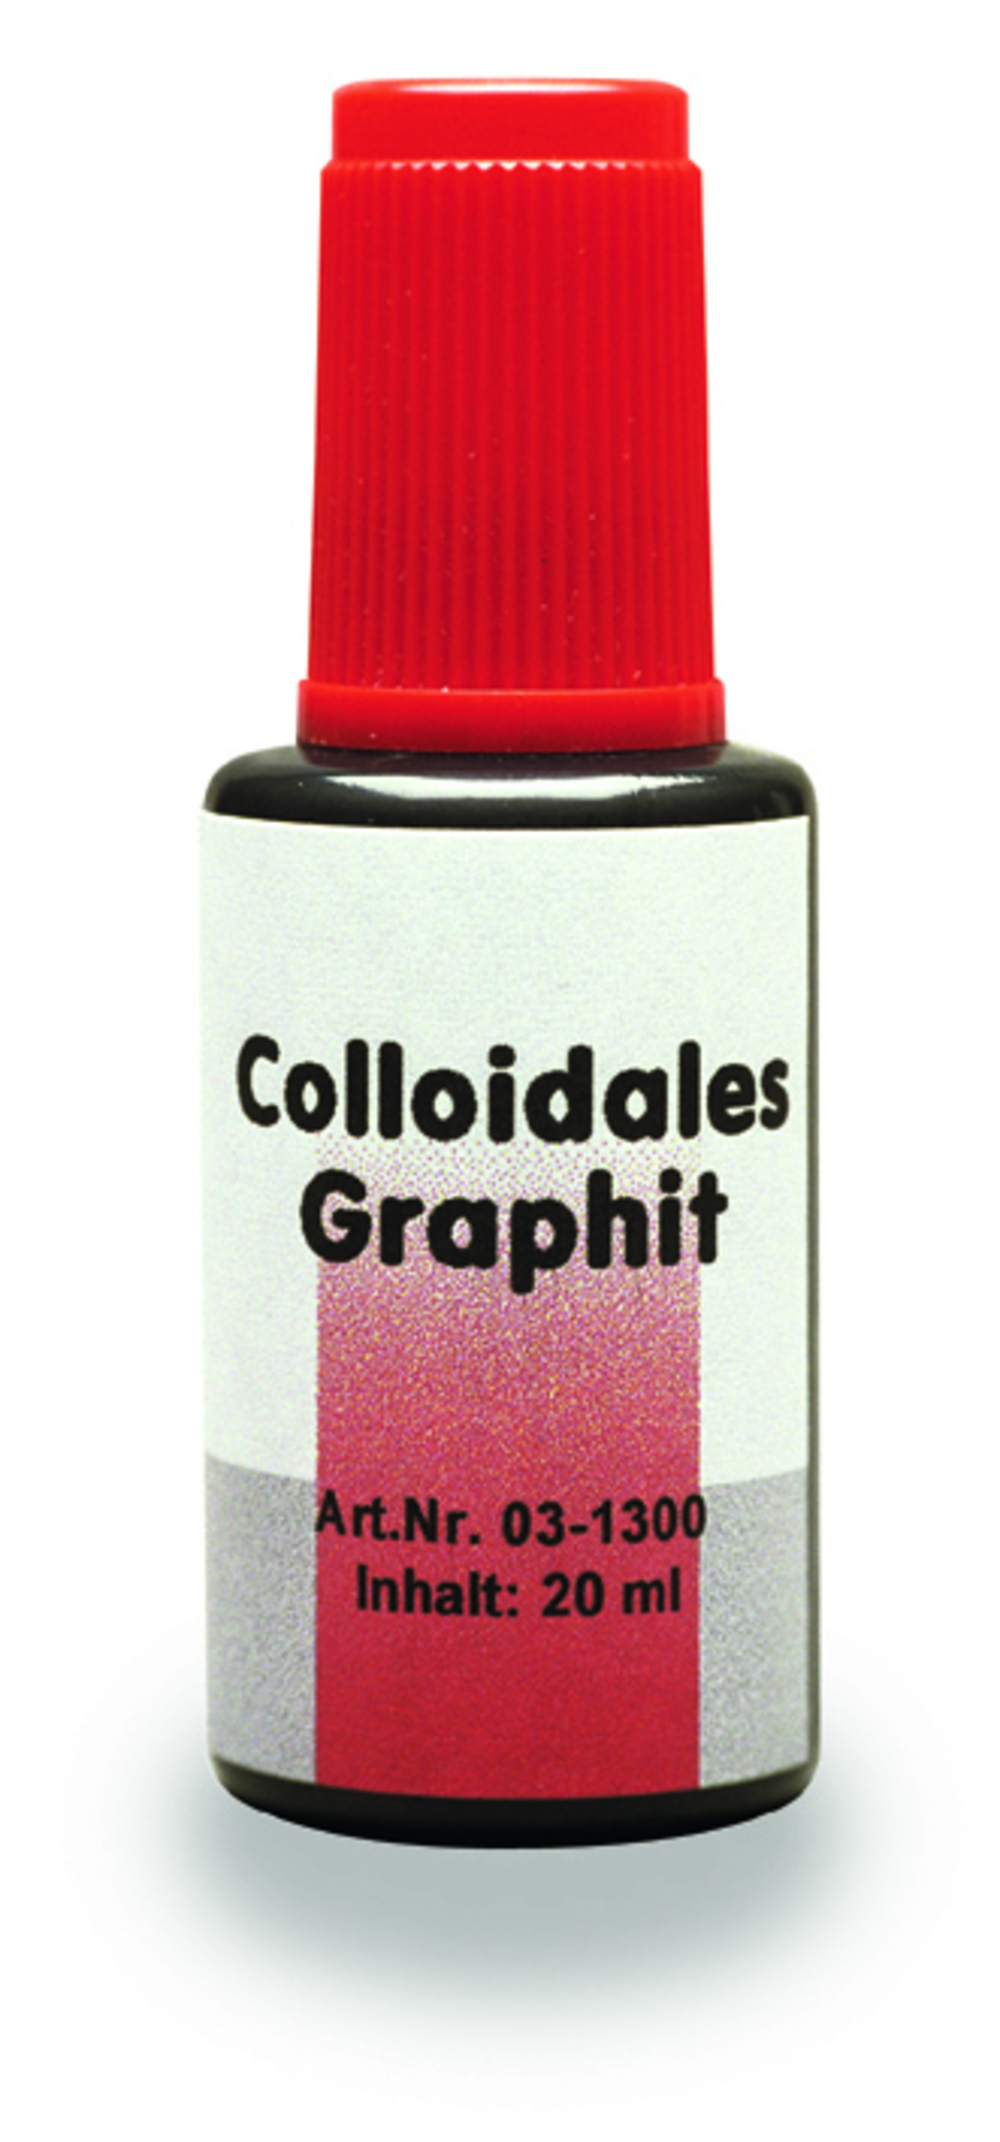 Colloides Graphit